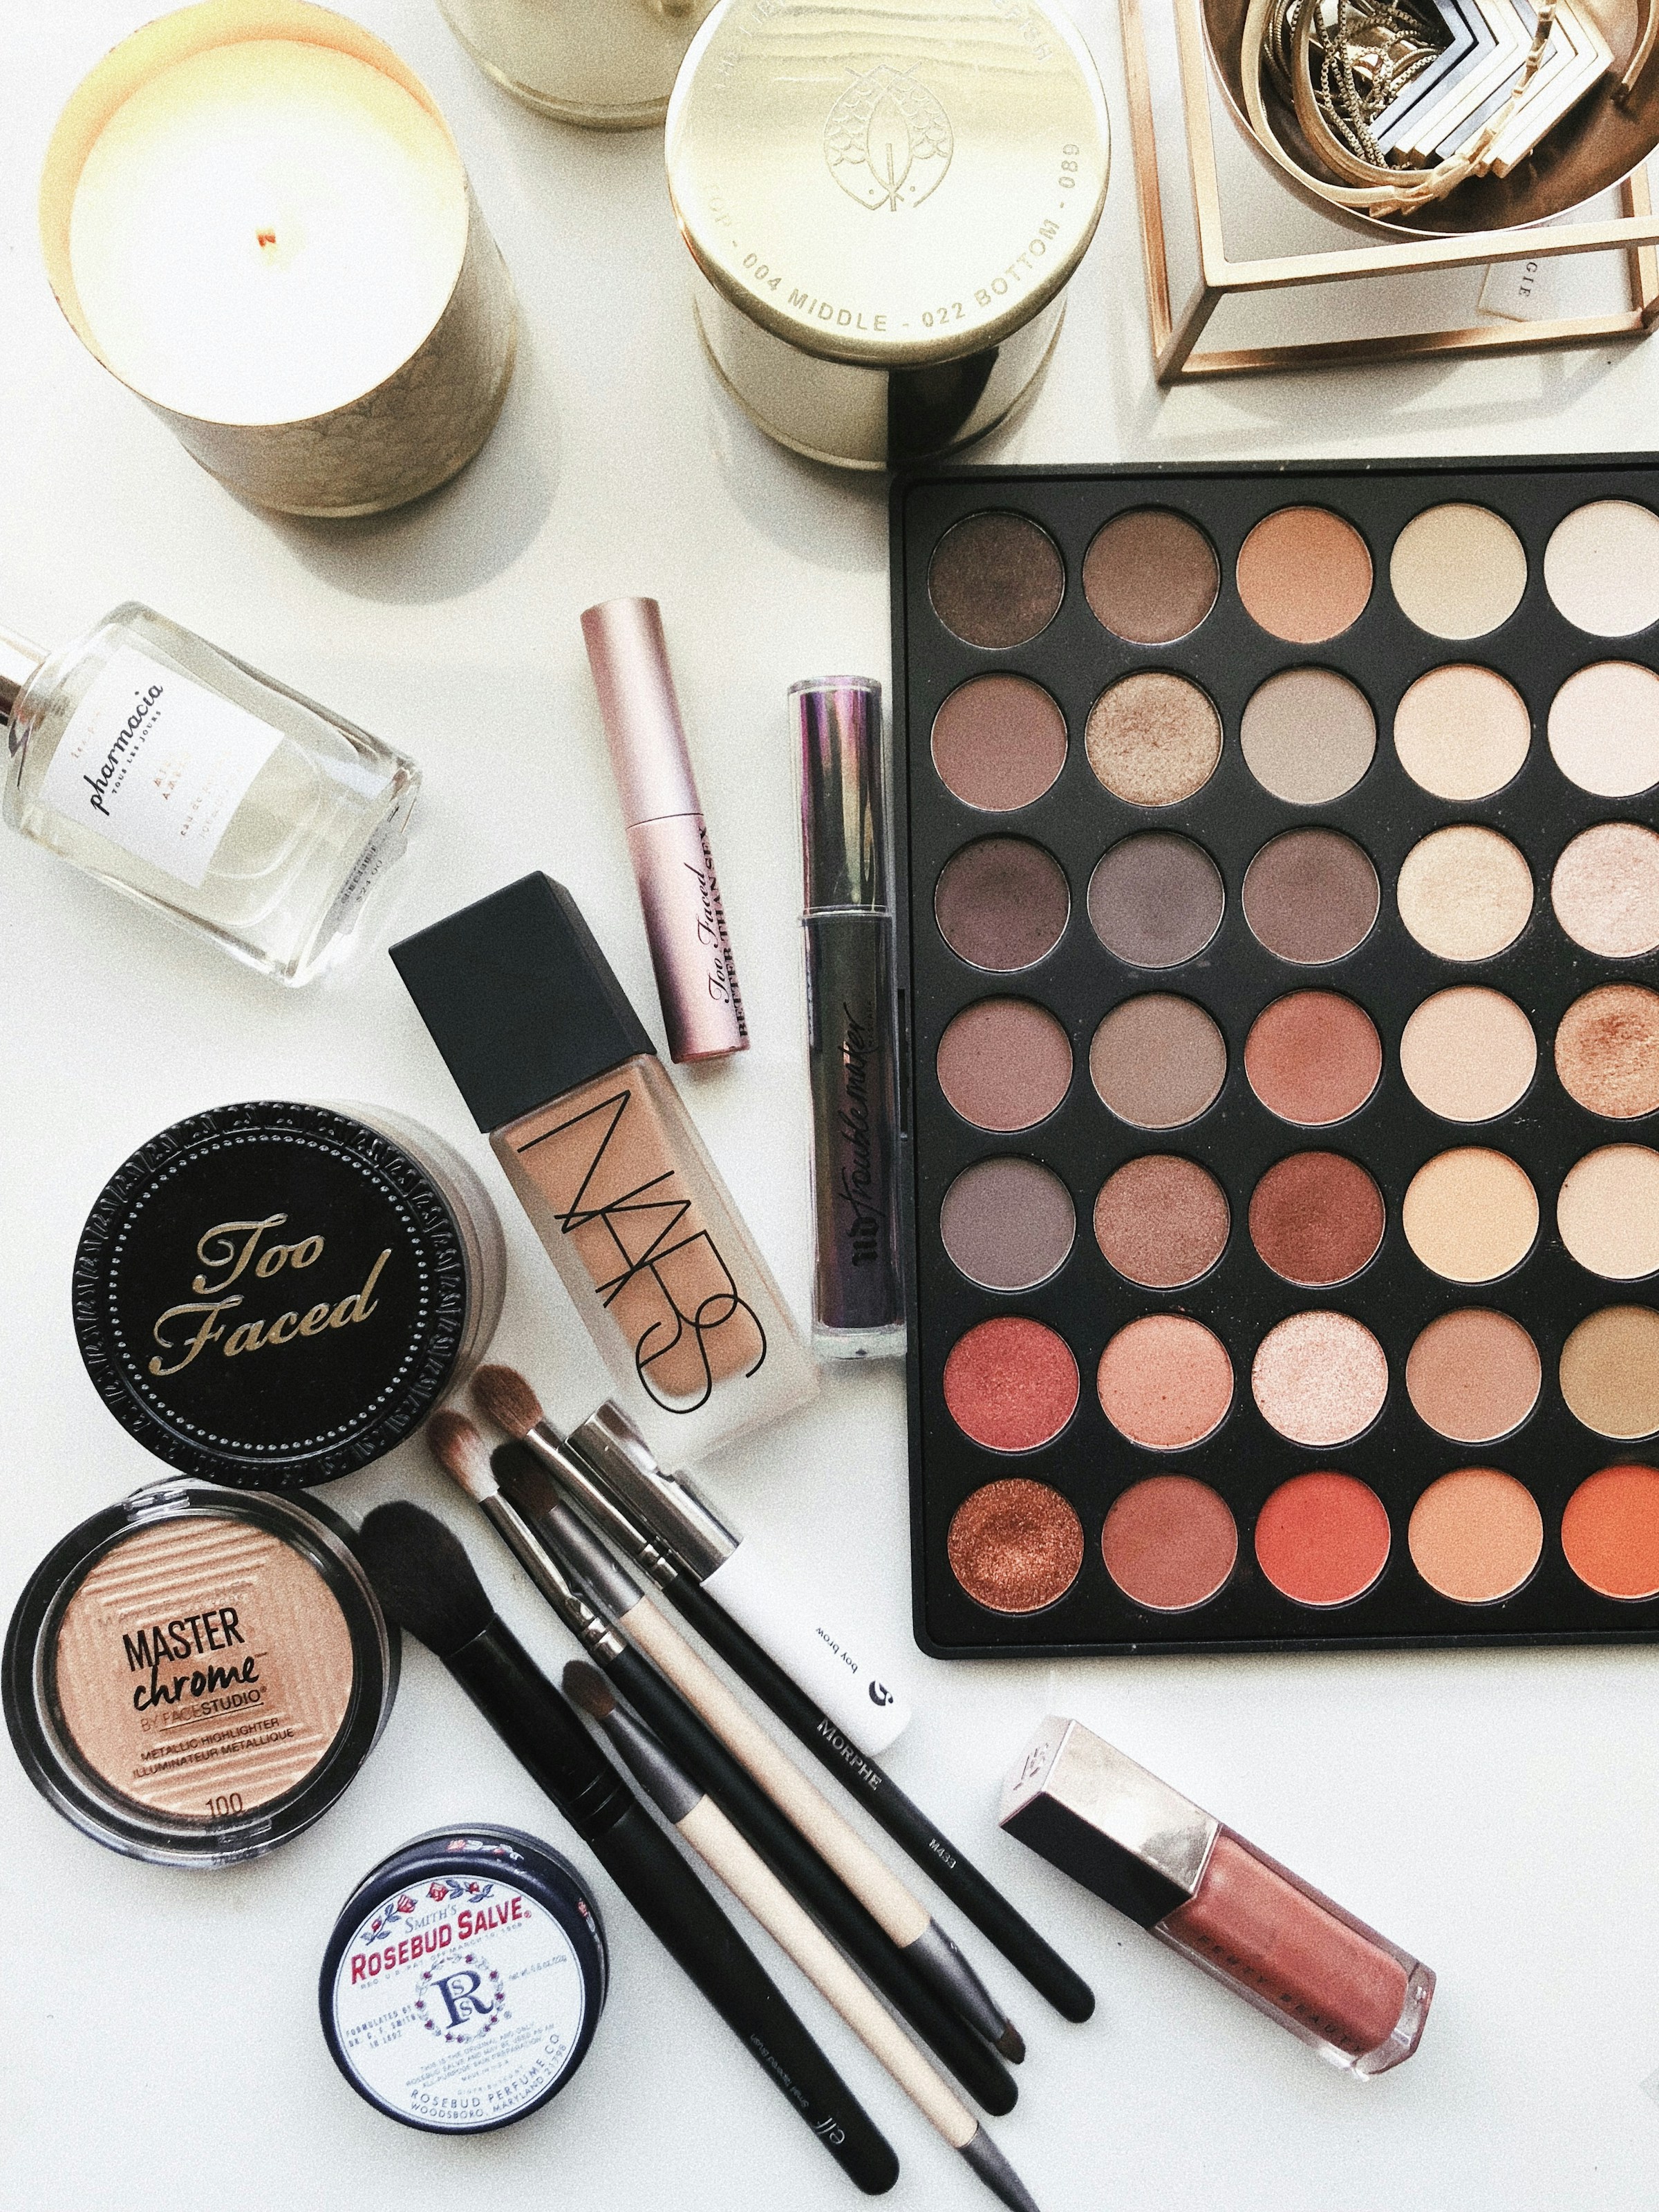 Close-up of makeup palette | Source: Unsplash